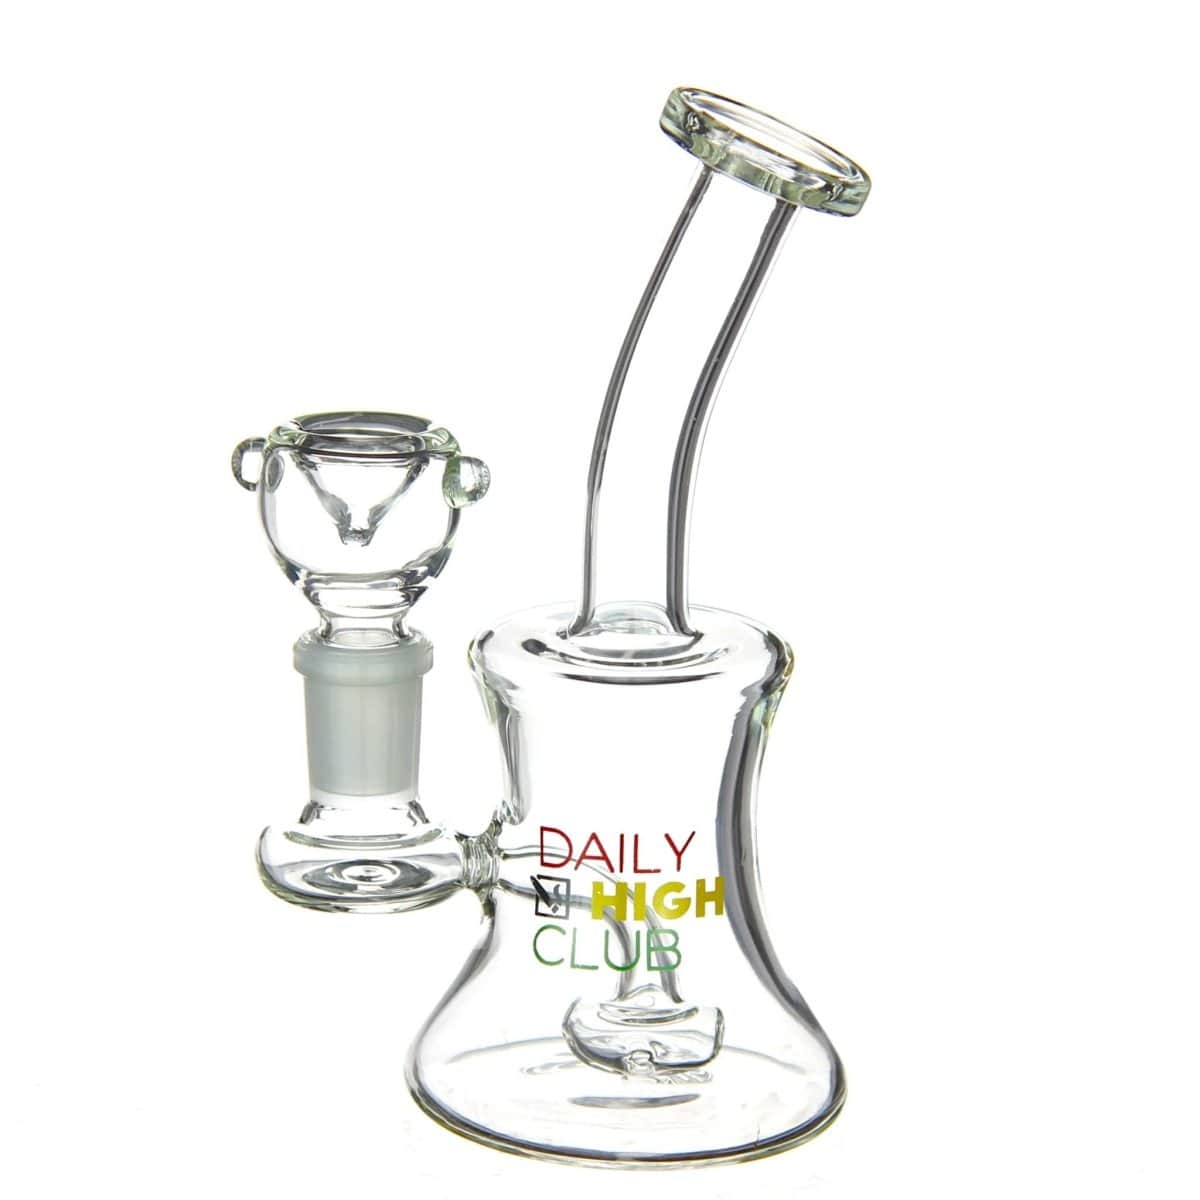 Daily High Club Glass Daily High Club "Rasta Hour Glass" Dab Rig